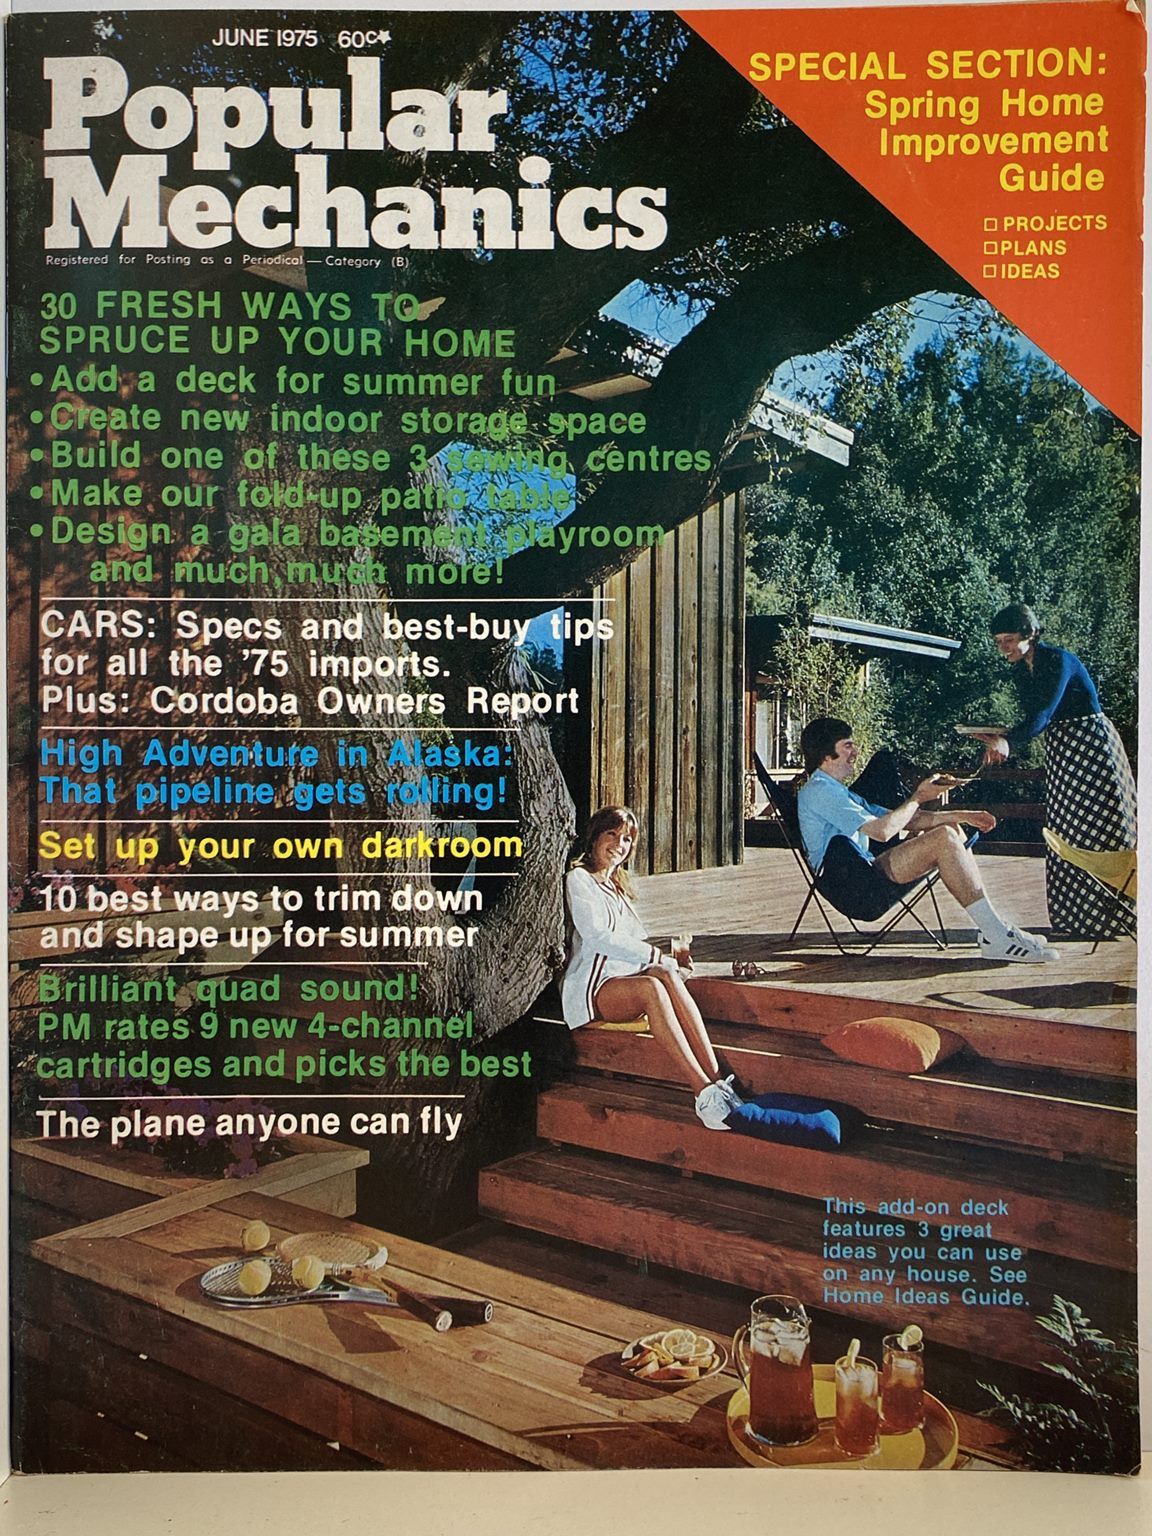 VINTAGE MAGAZINE: Popular Mechanics - Vol. 143, No. 4 - June 1975